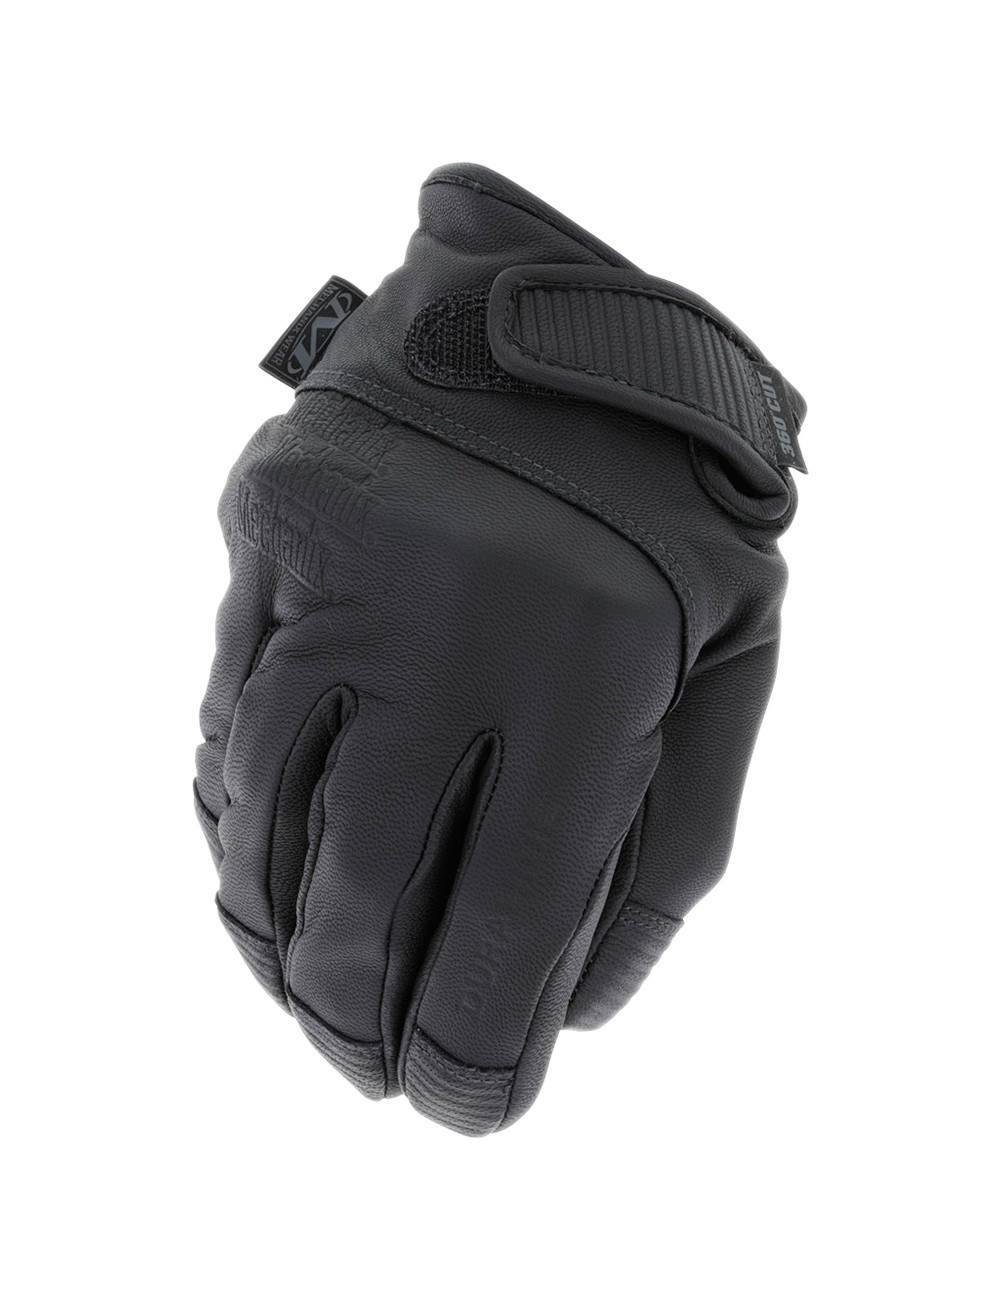 MECHANIX NSLE-55-011 Leather Needlestick Law Enforcement Gloves XL